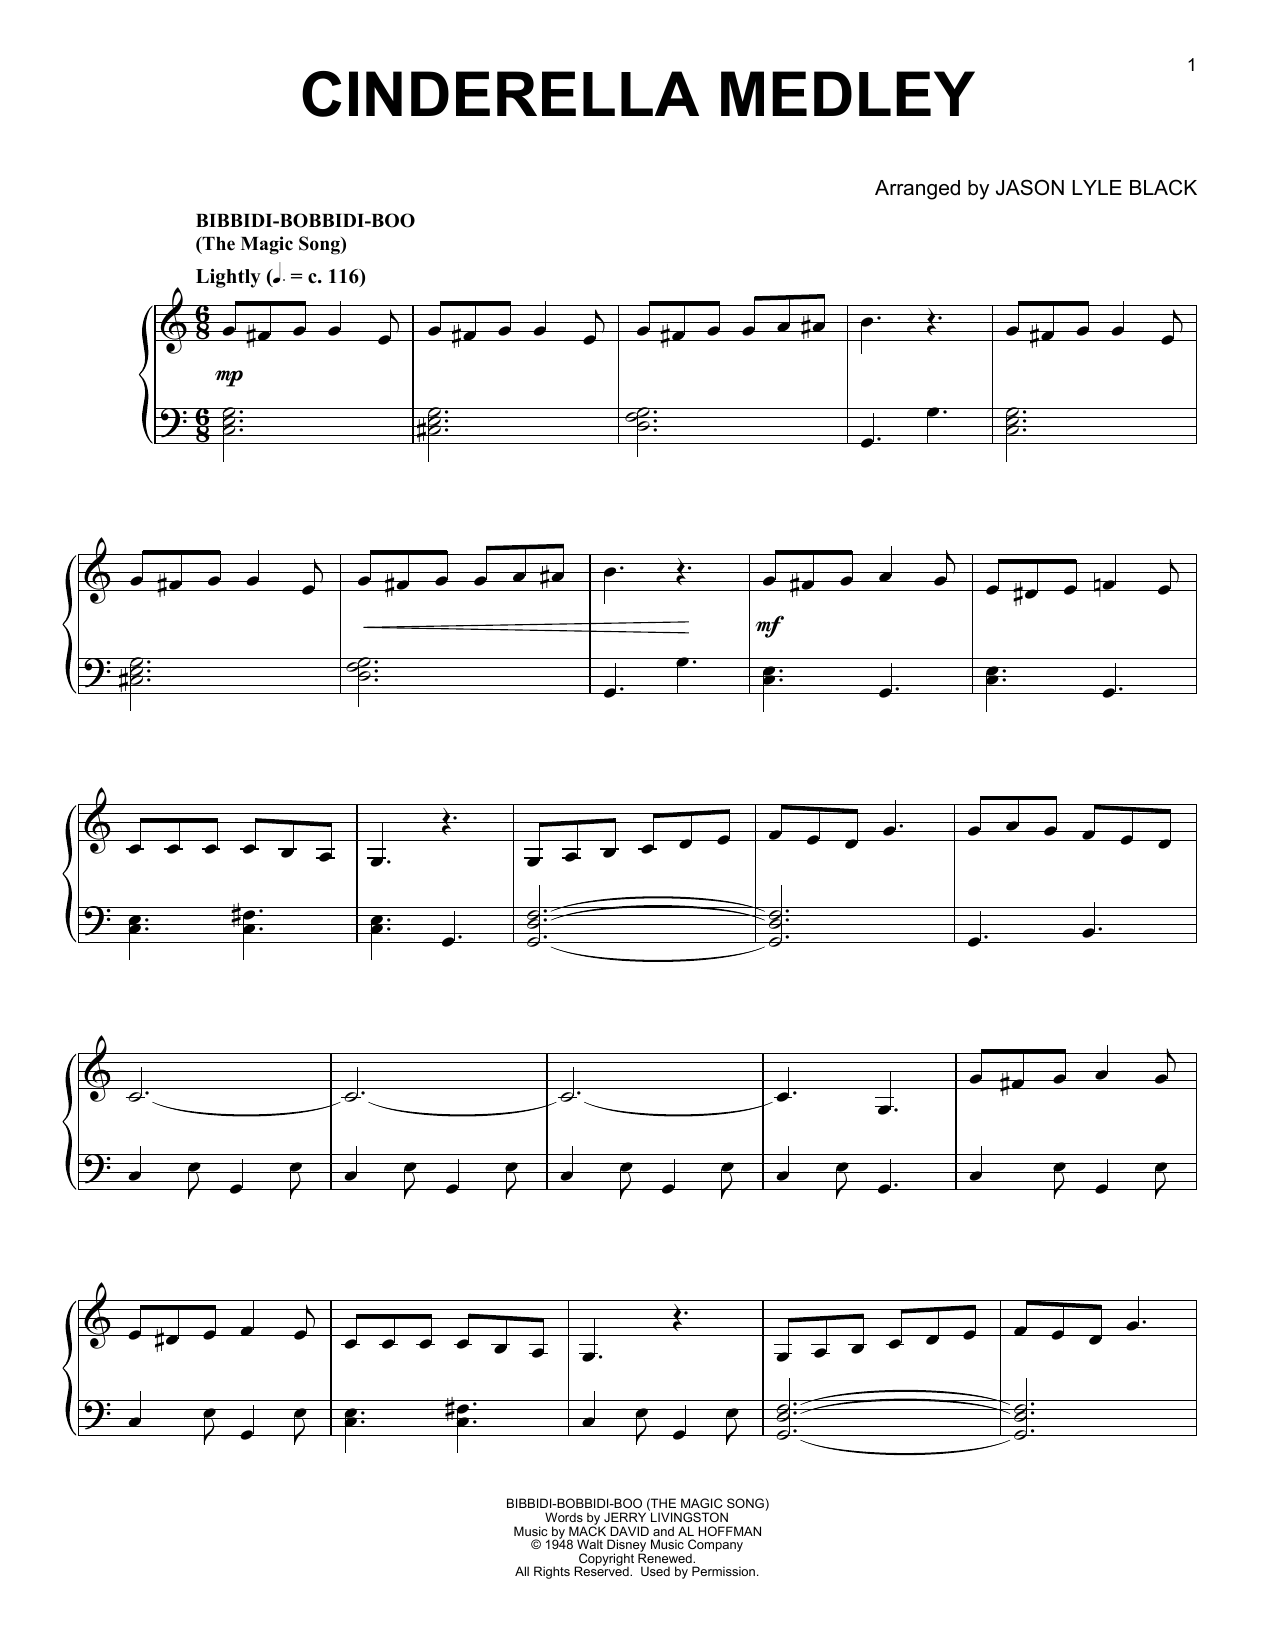 Mack David, Al Hoffman and Jerry Livingston Cinderella Medley (arr. Jason Lyle Black) Sheet Music Notes & Chords for Piano - Download or Print PDF